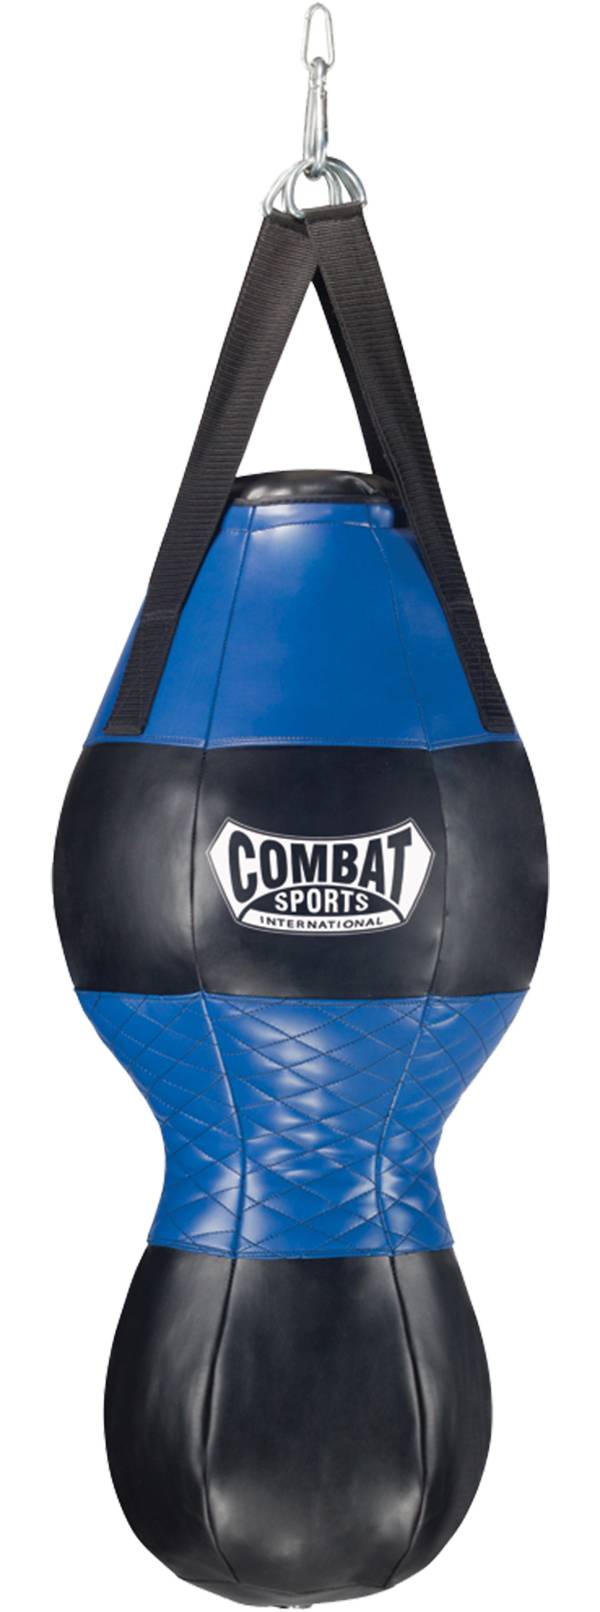 Combat Sports 45 lb Double End Heavy Bag product image